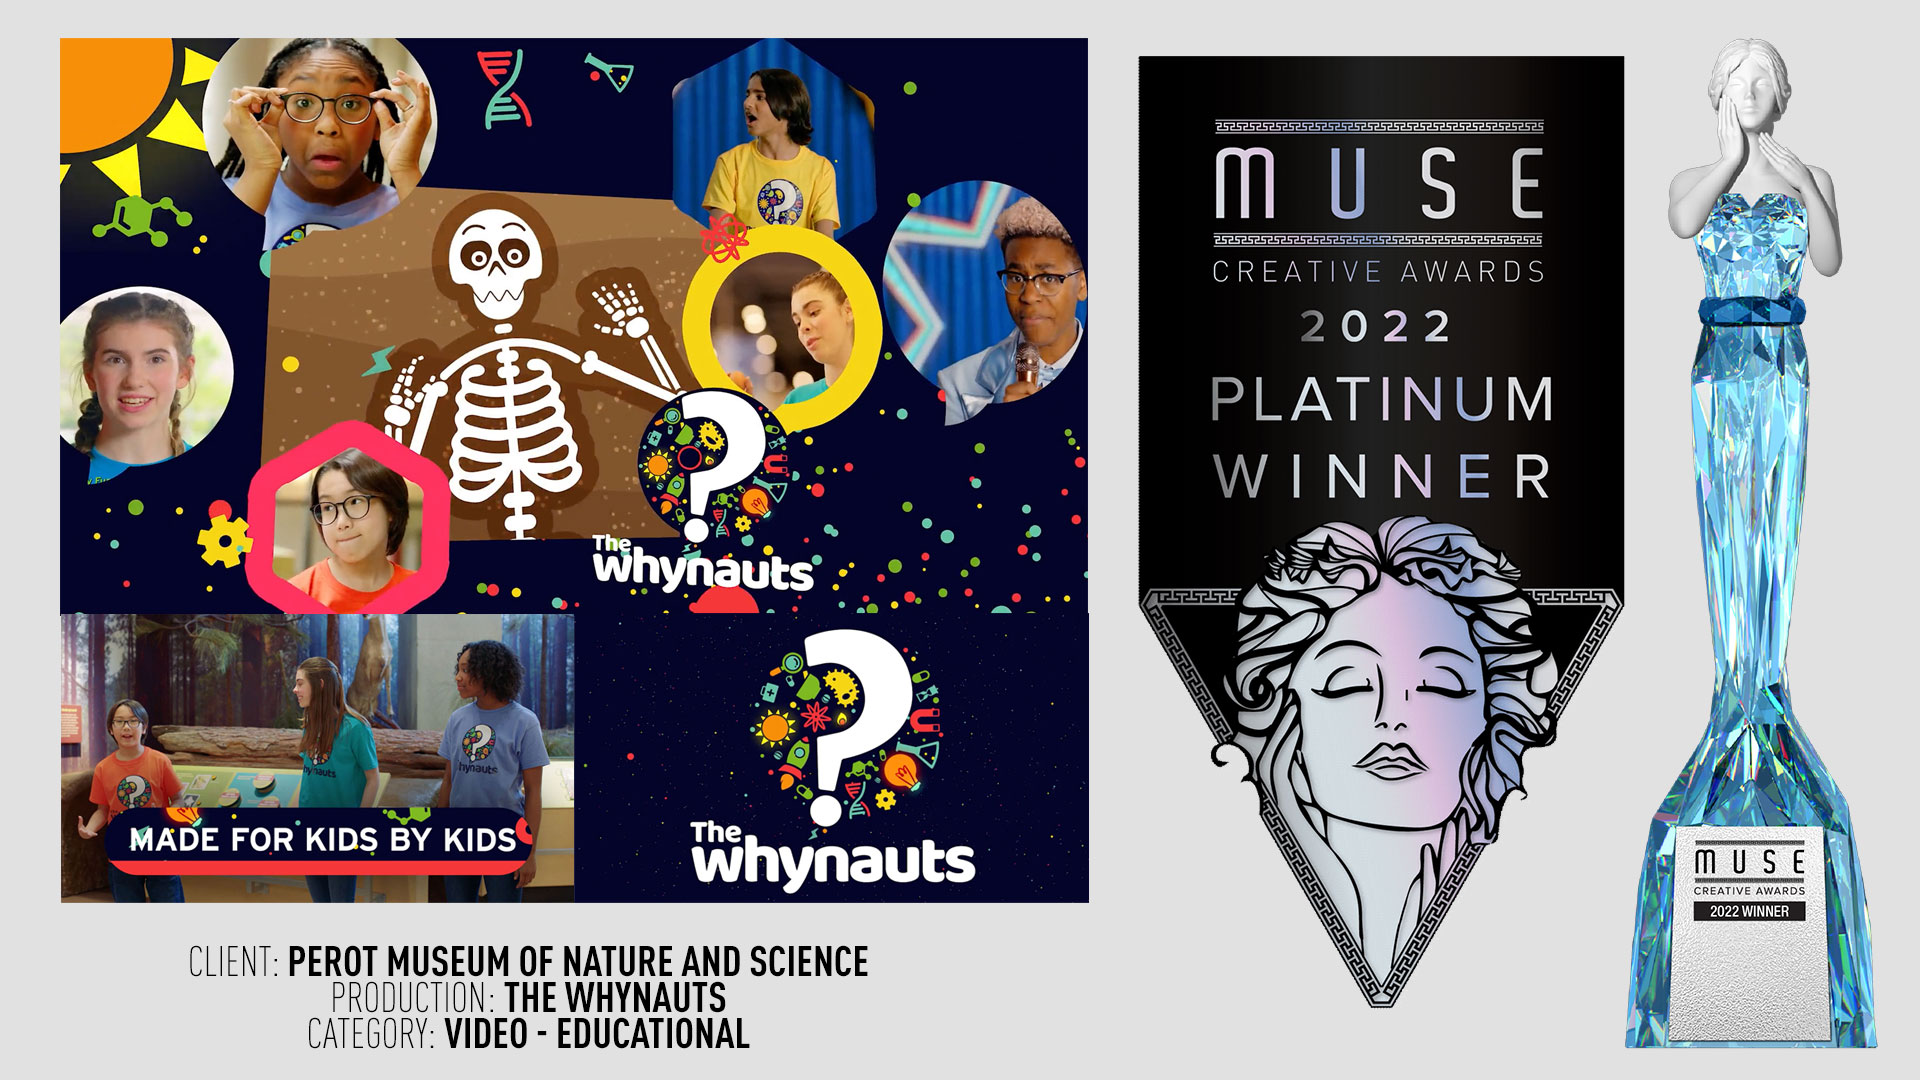 Muse Creative Awards Platinum